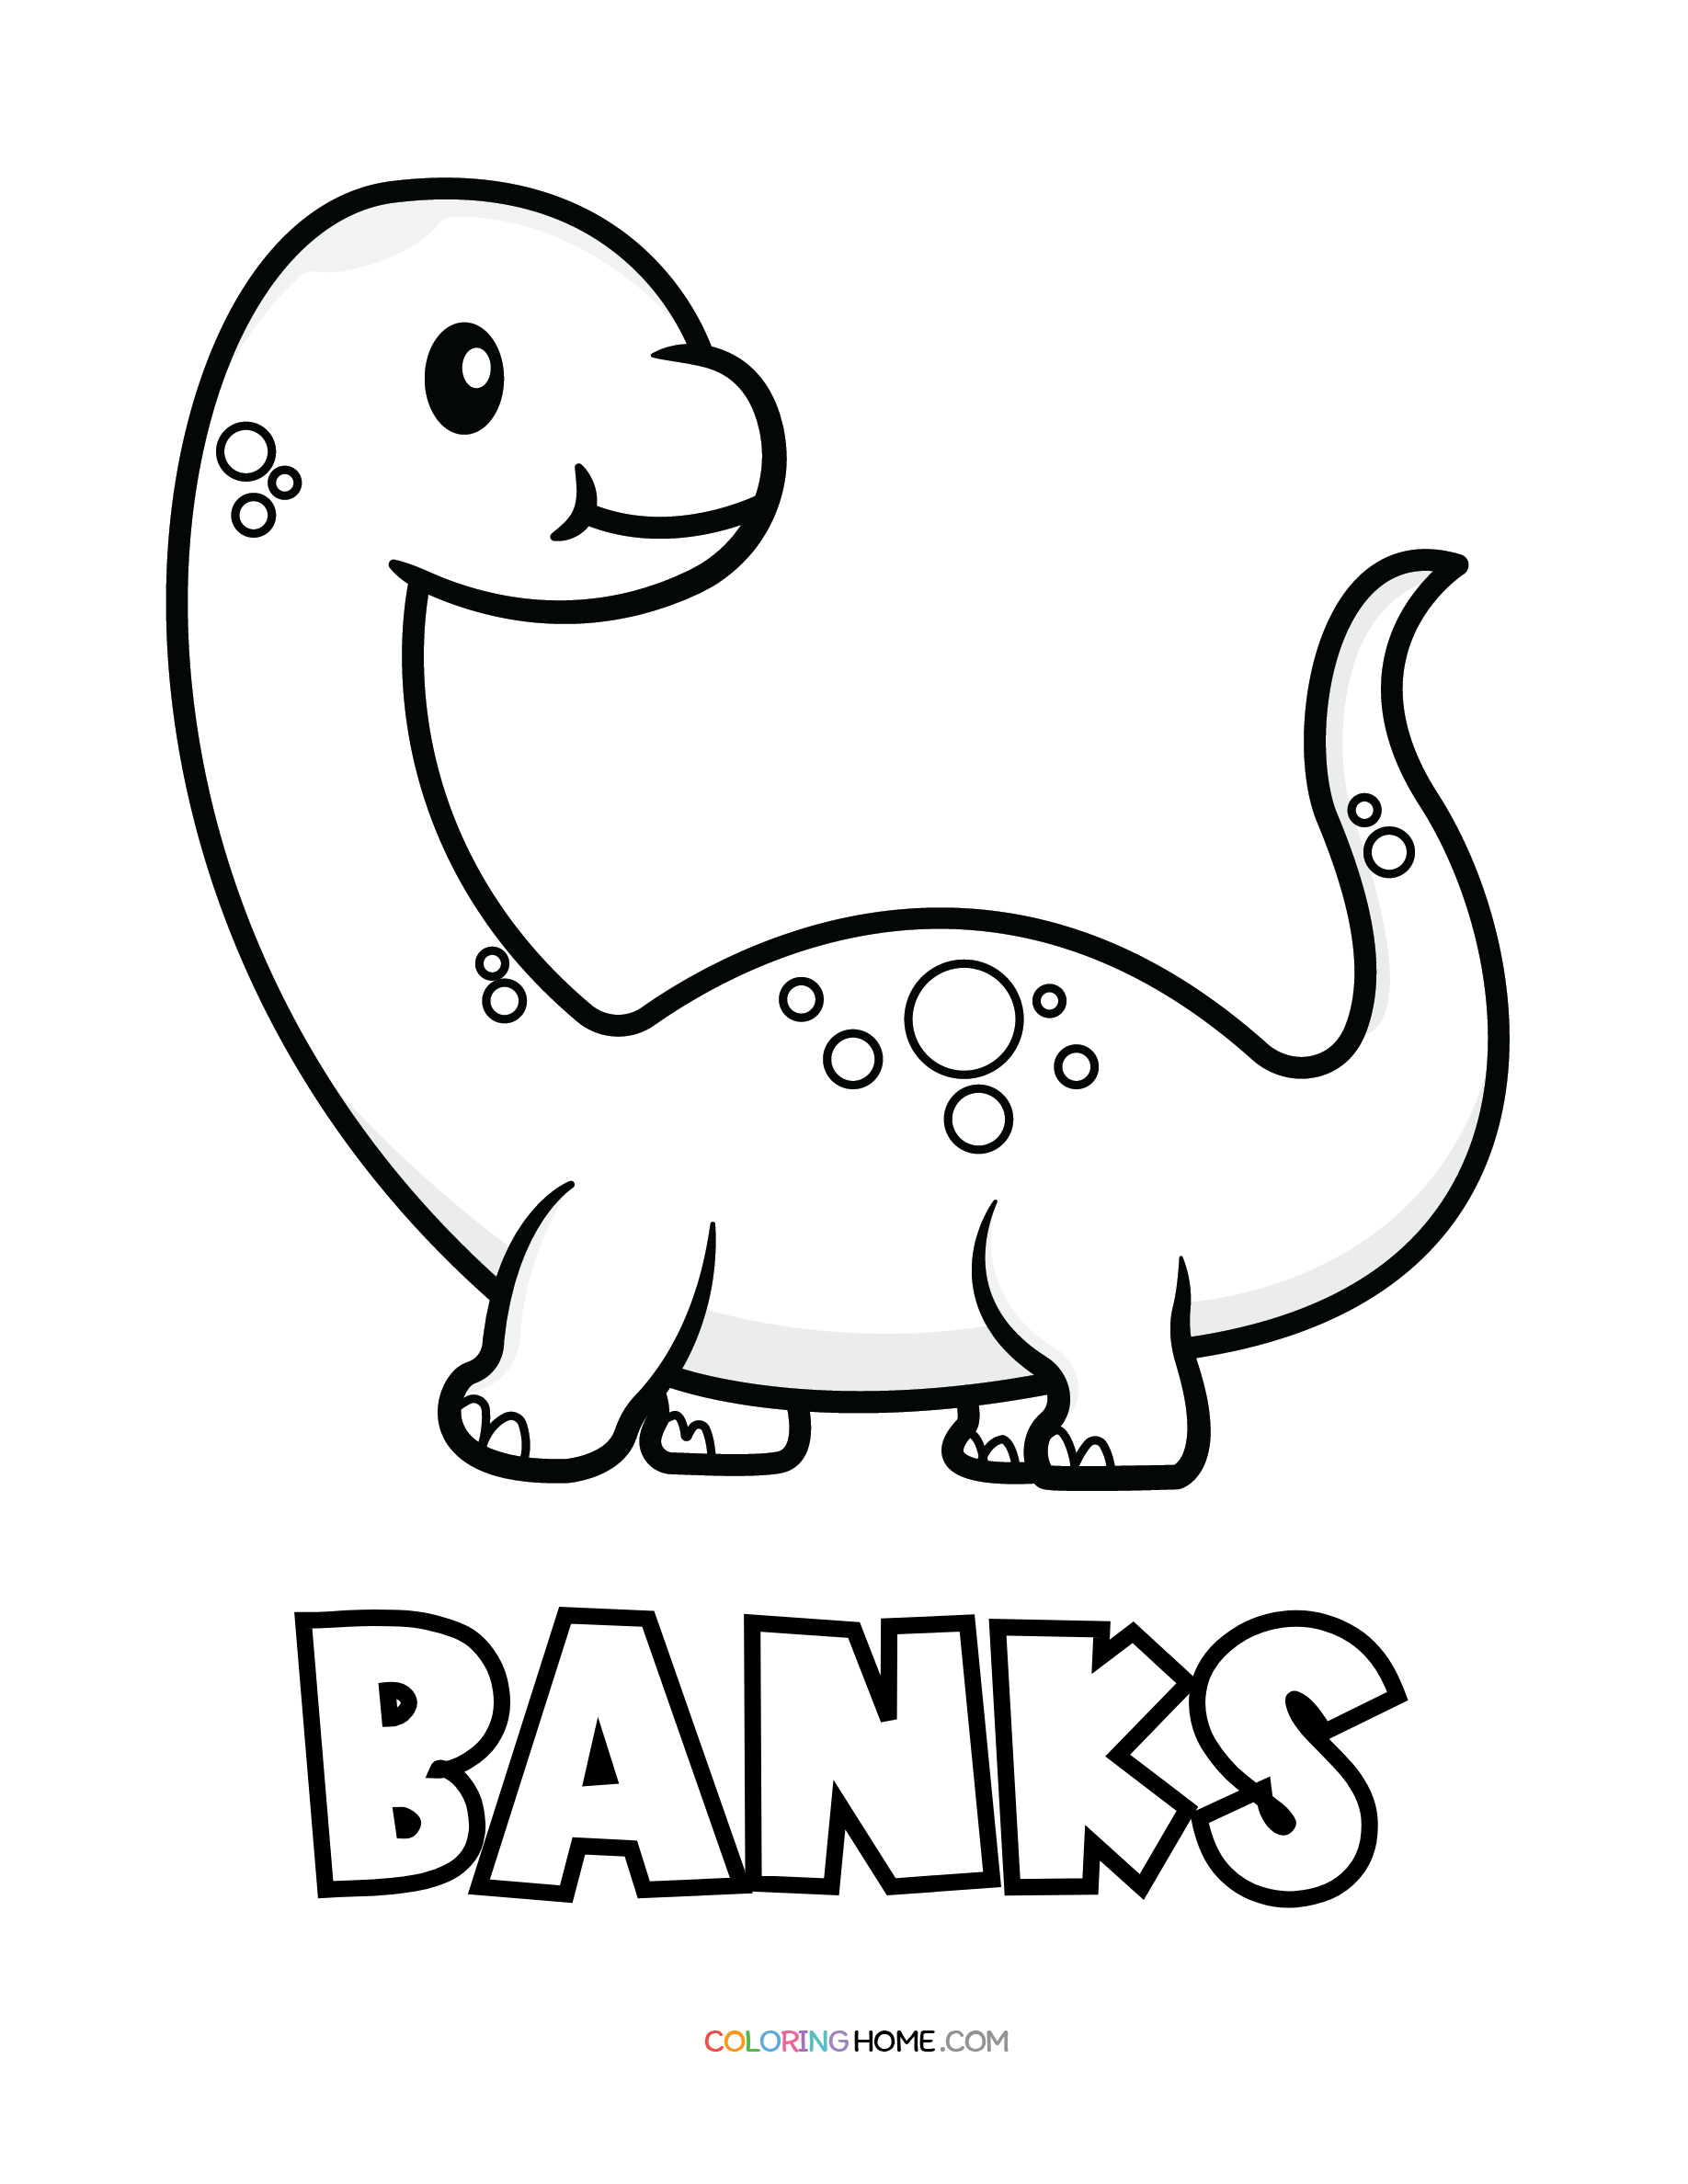 Banks dinosaur coloring page